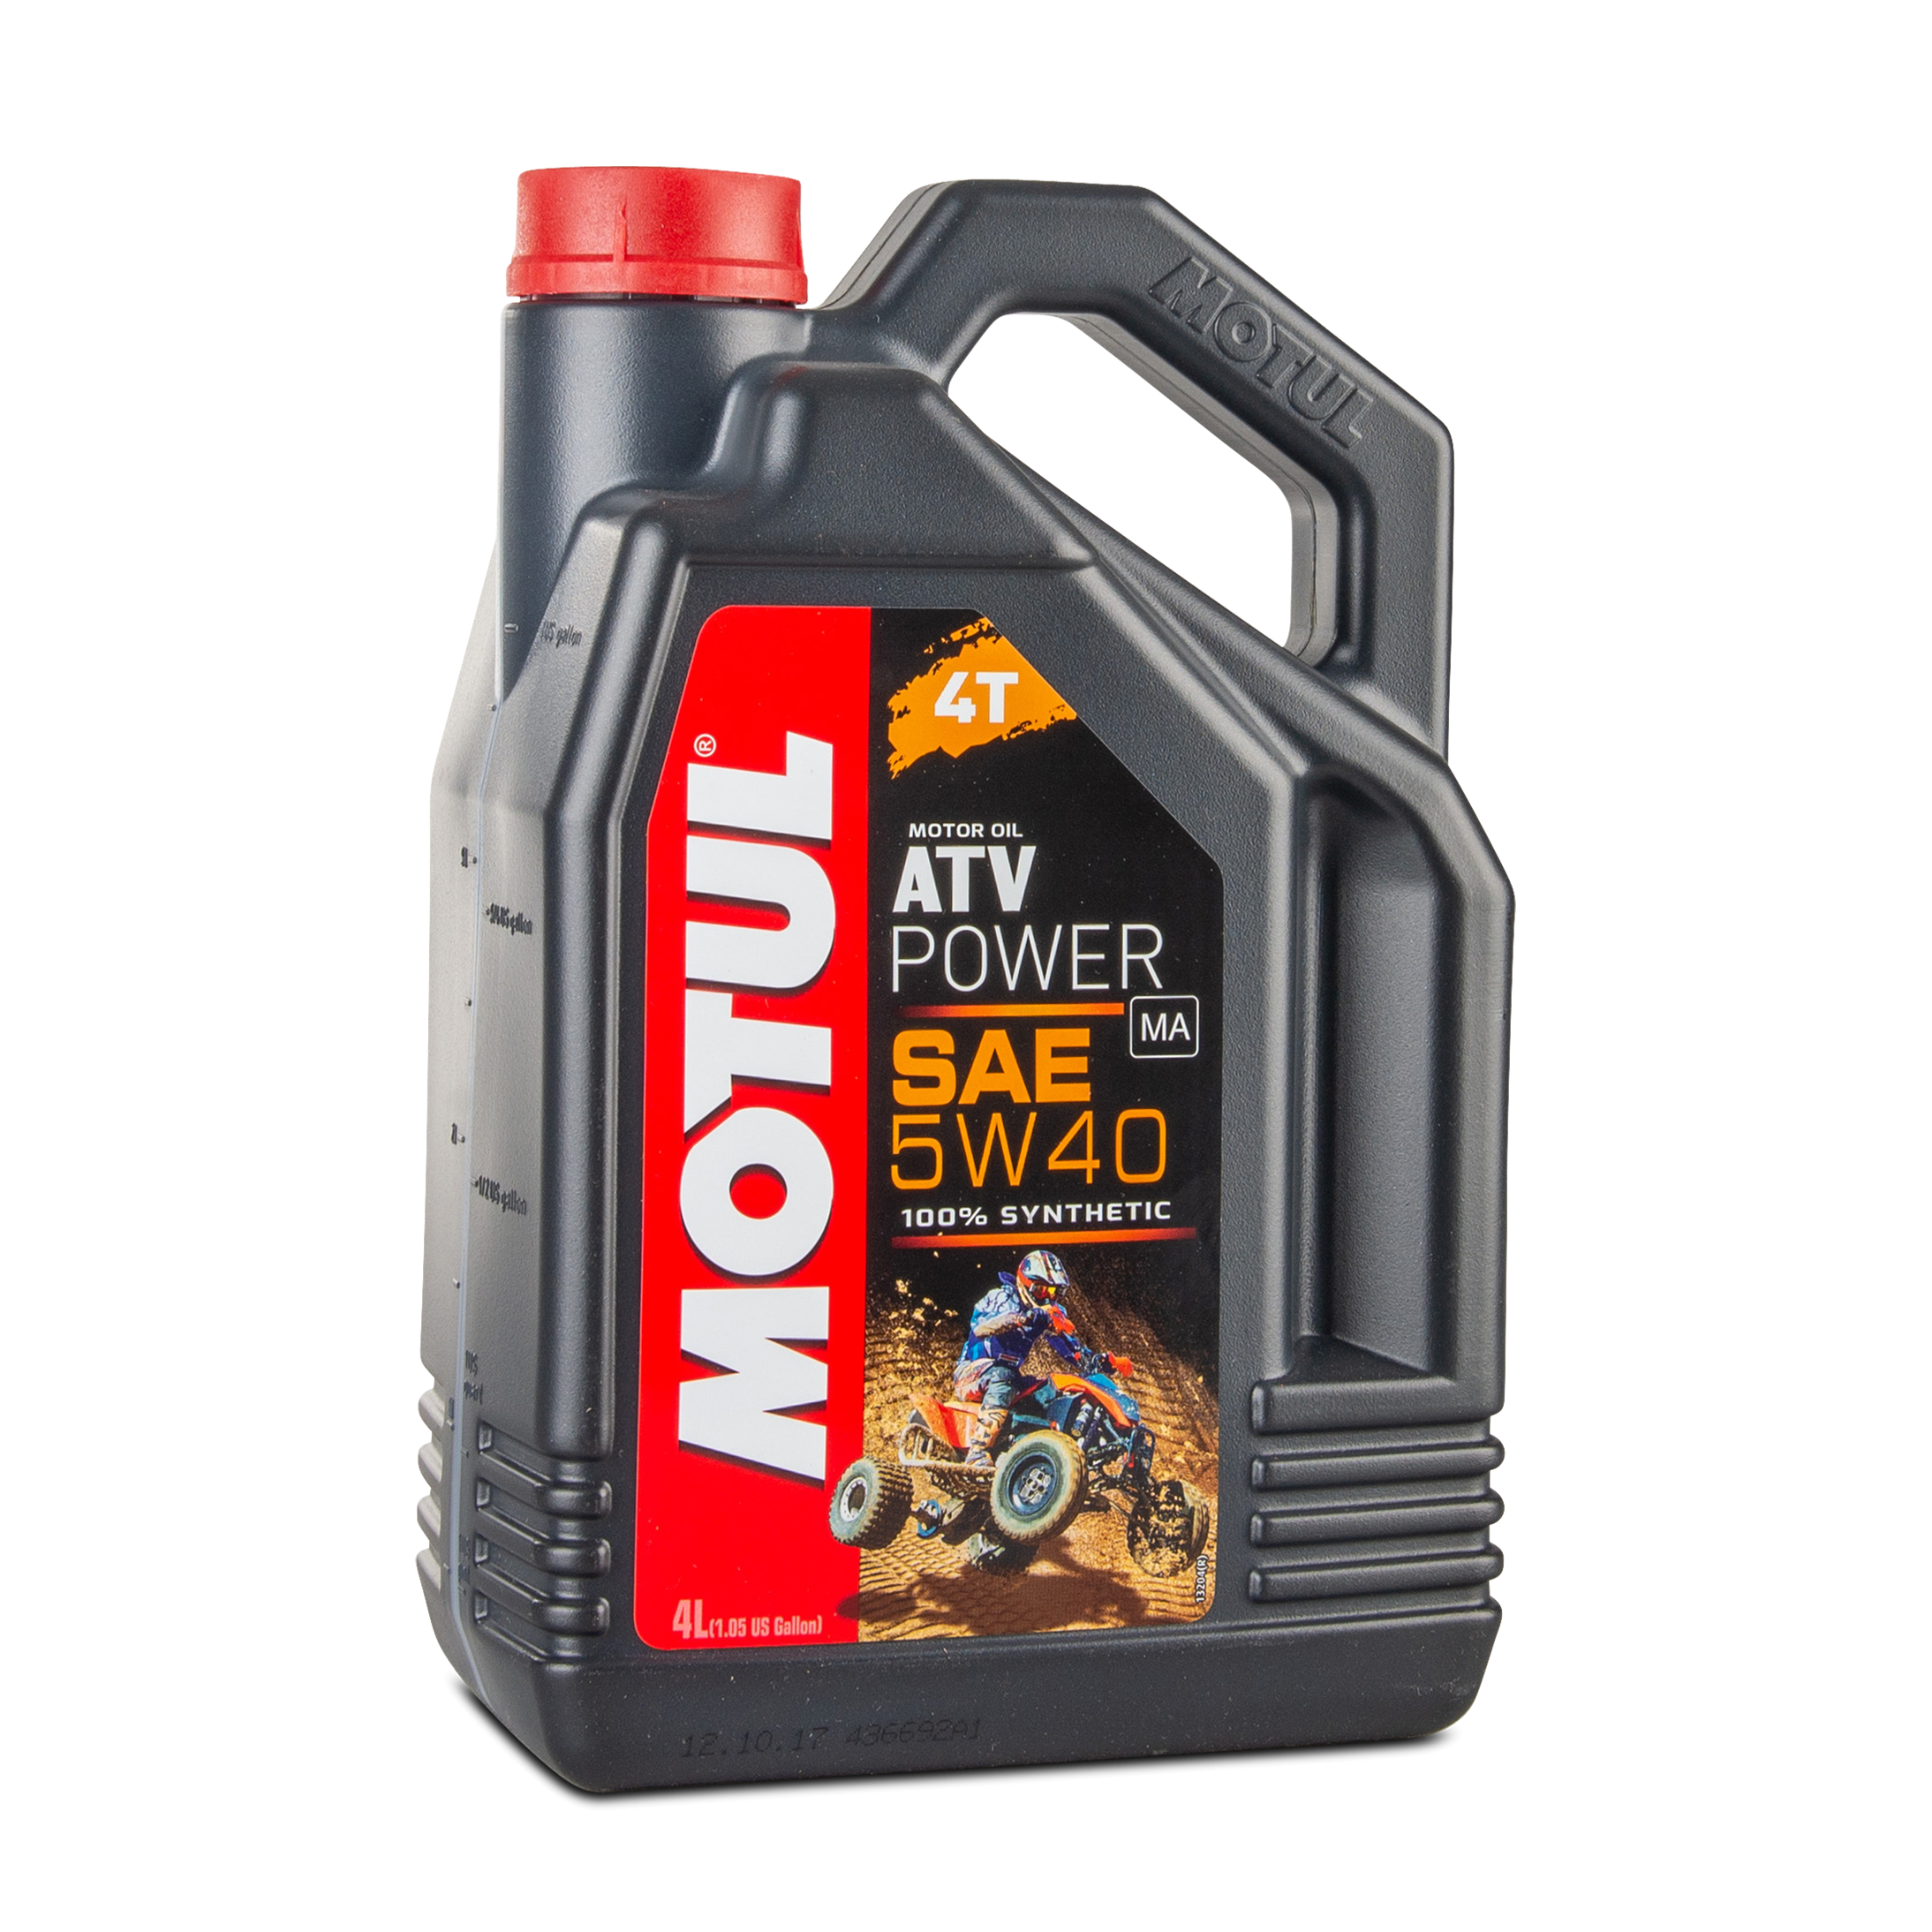 Motul ATV Power 5W40 4T Fully-Synthetic Oil 4L - Now 18% Savings